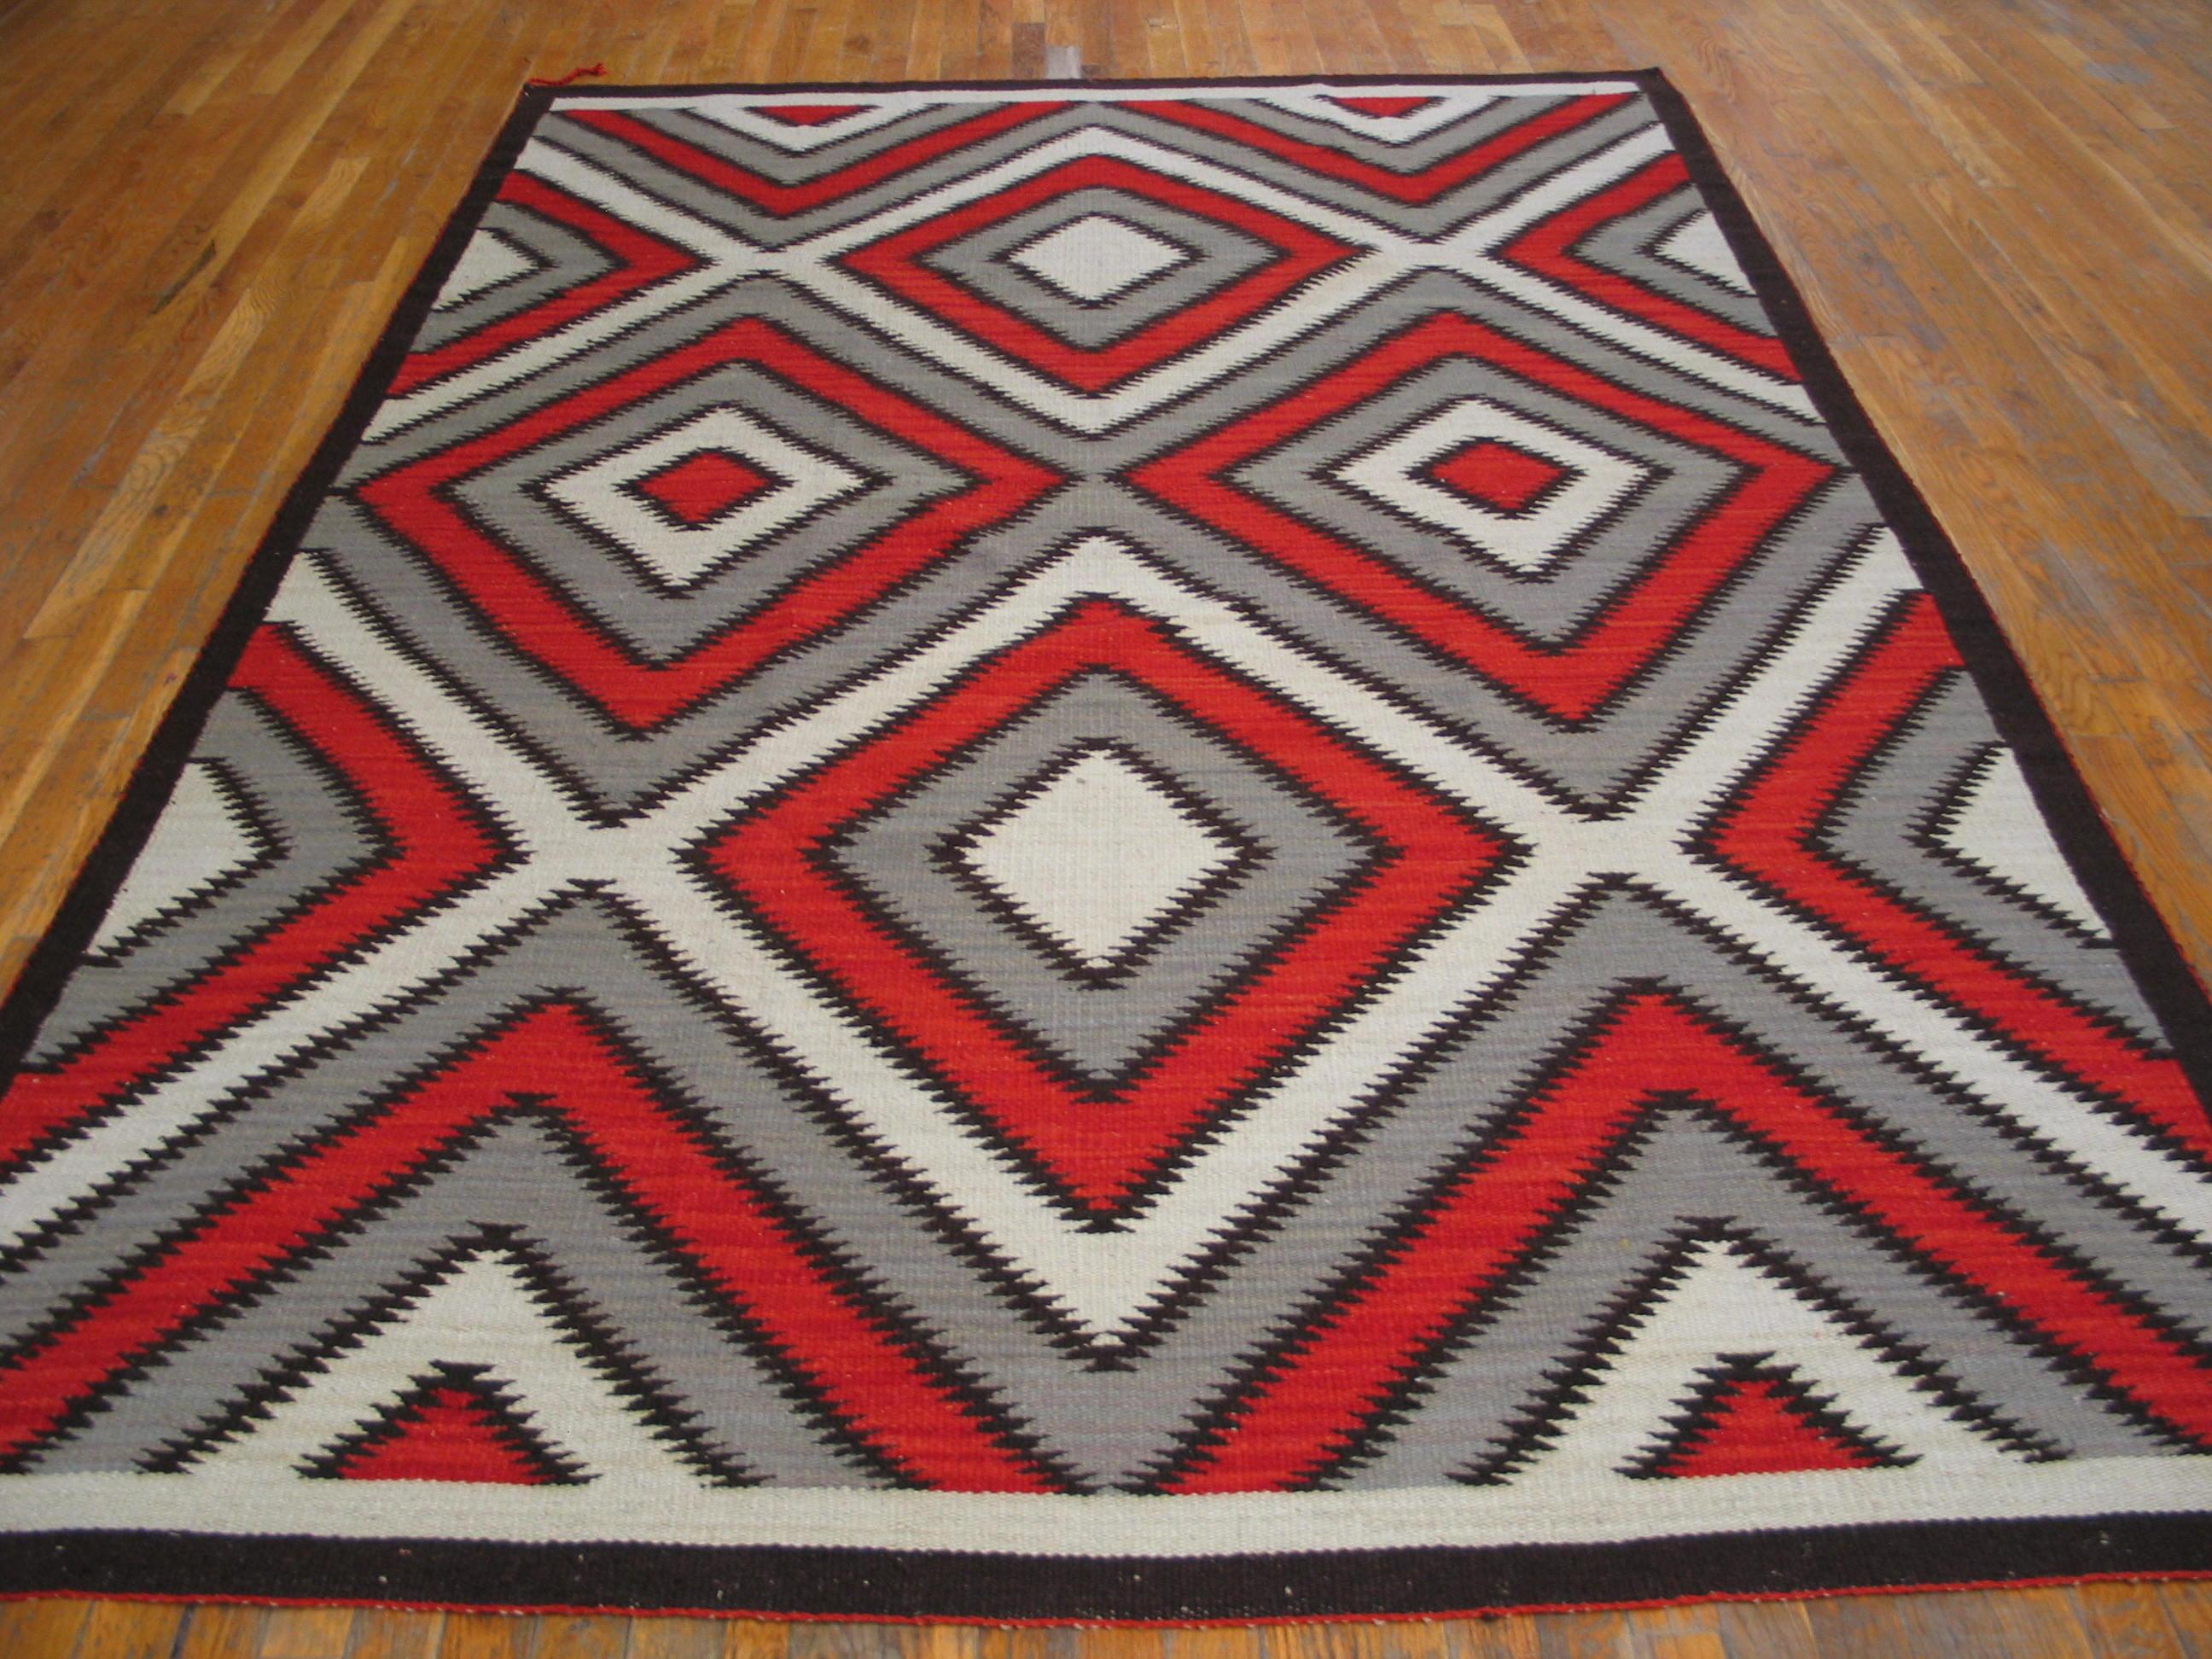 Indian Navajo style rug 6'0